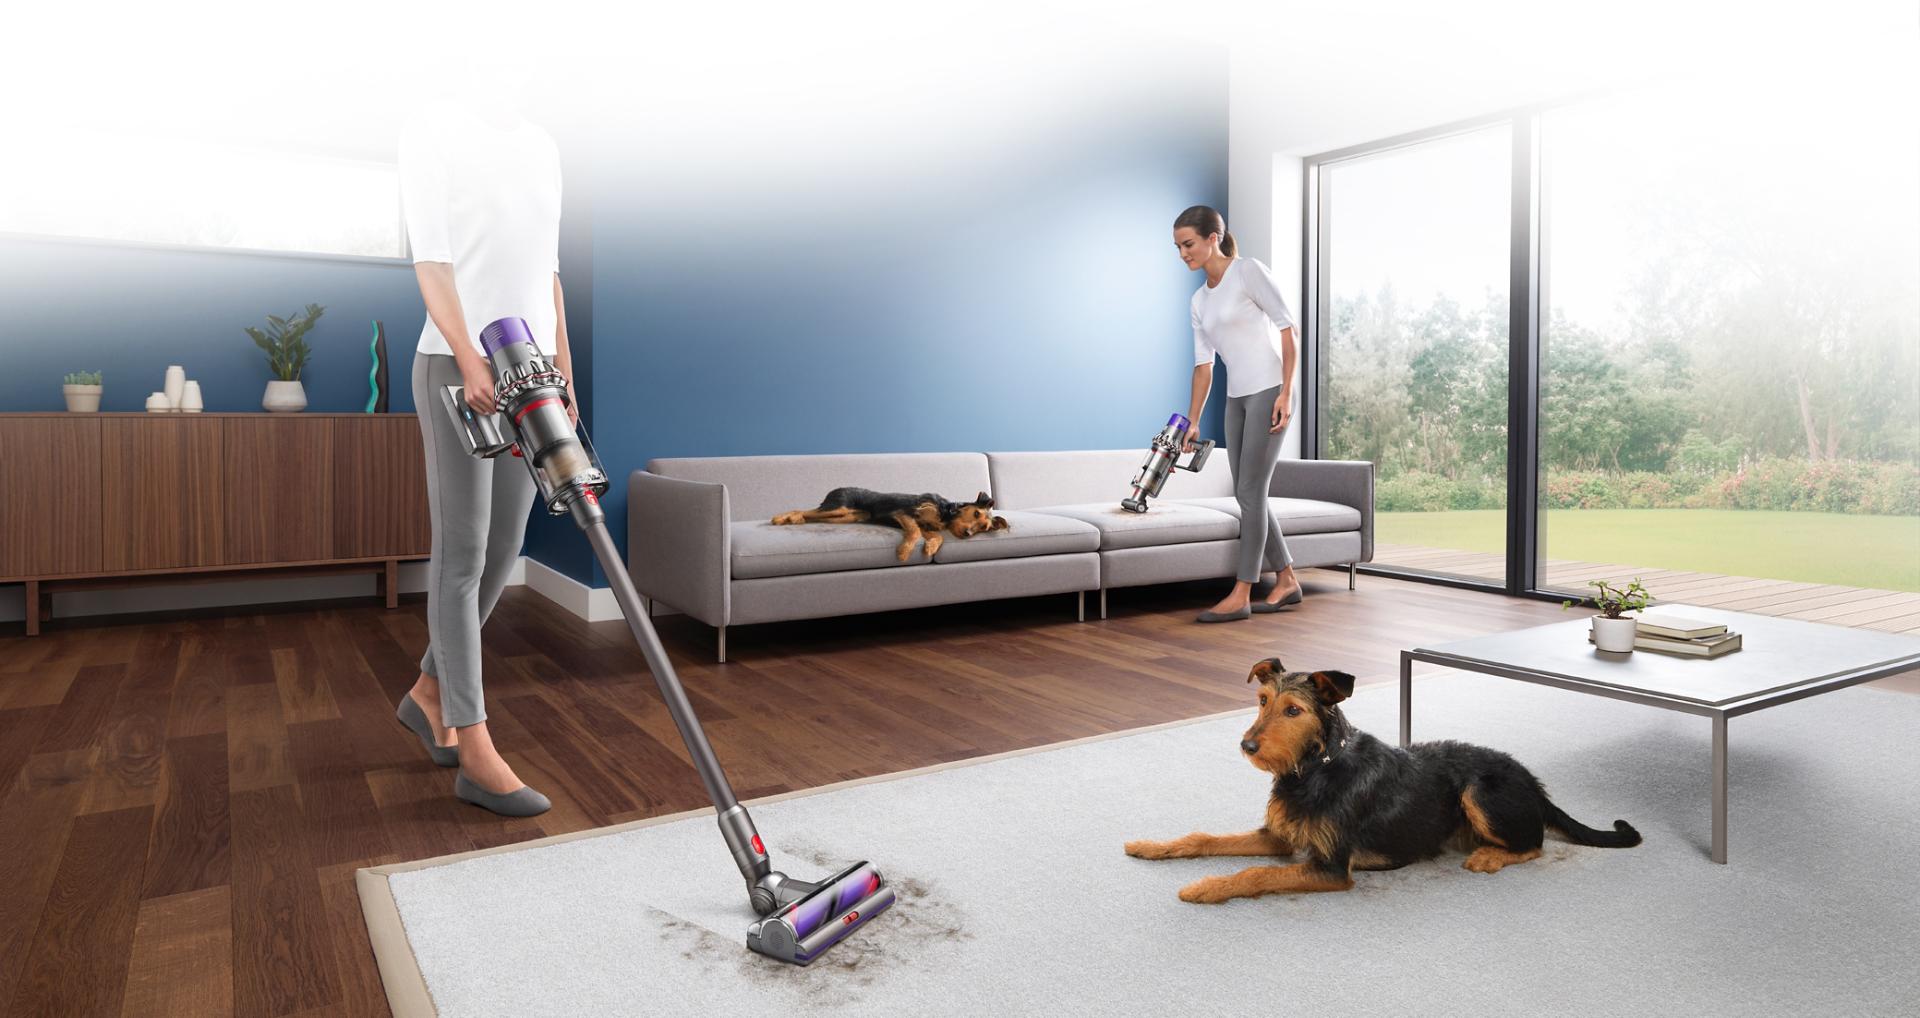 Women vacuuming after dog